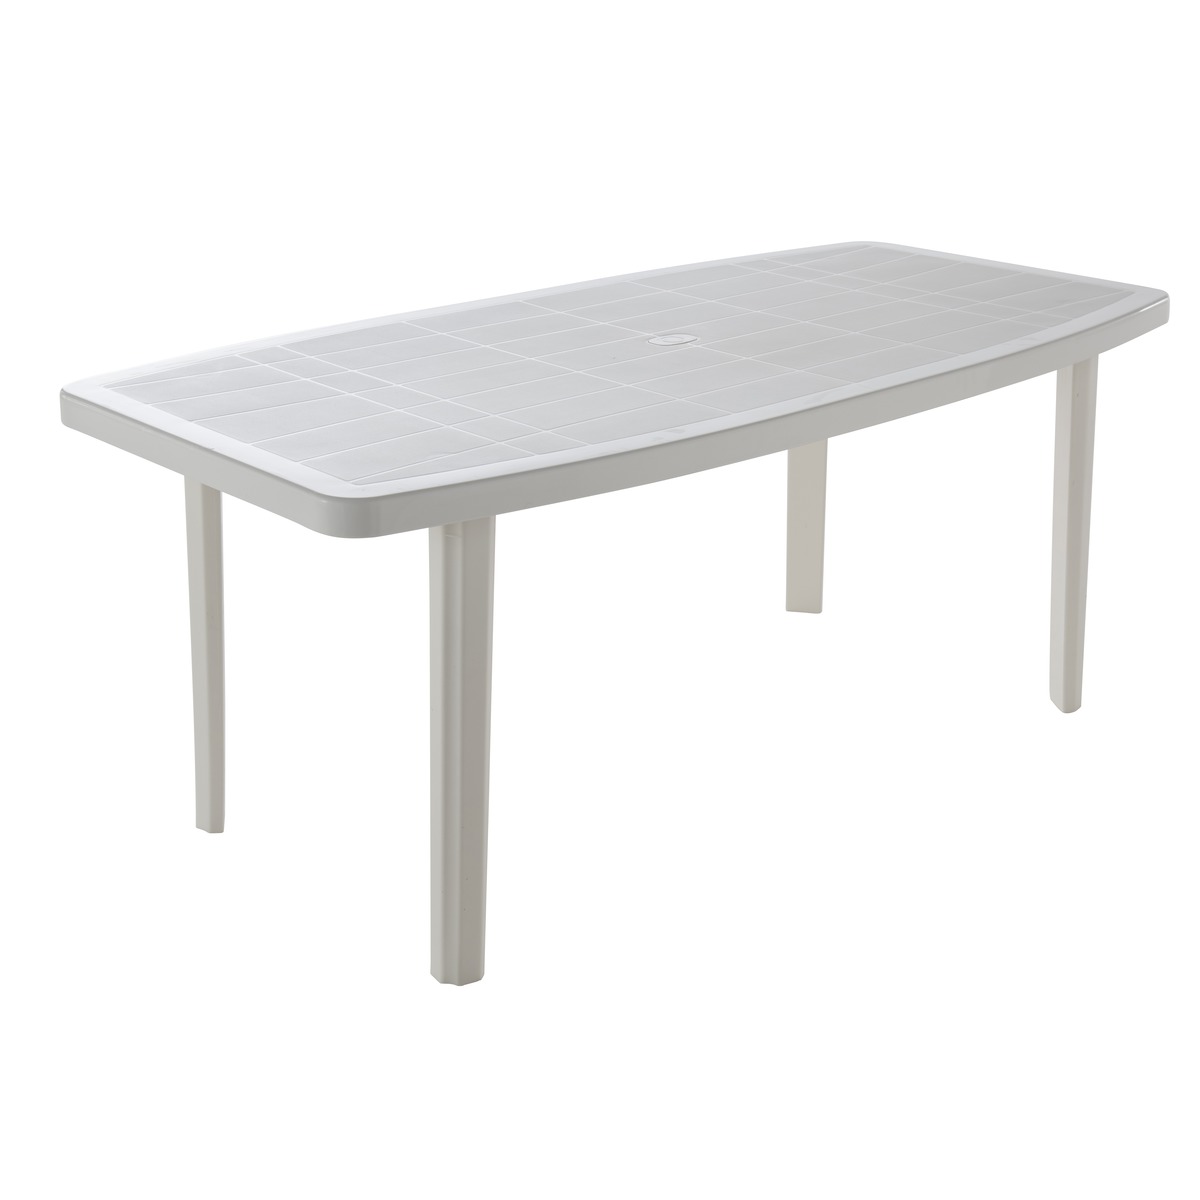 TABLE DE JARDIN PVC BLANC